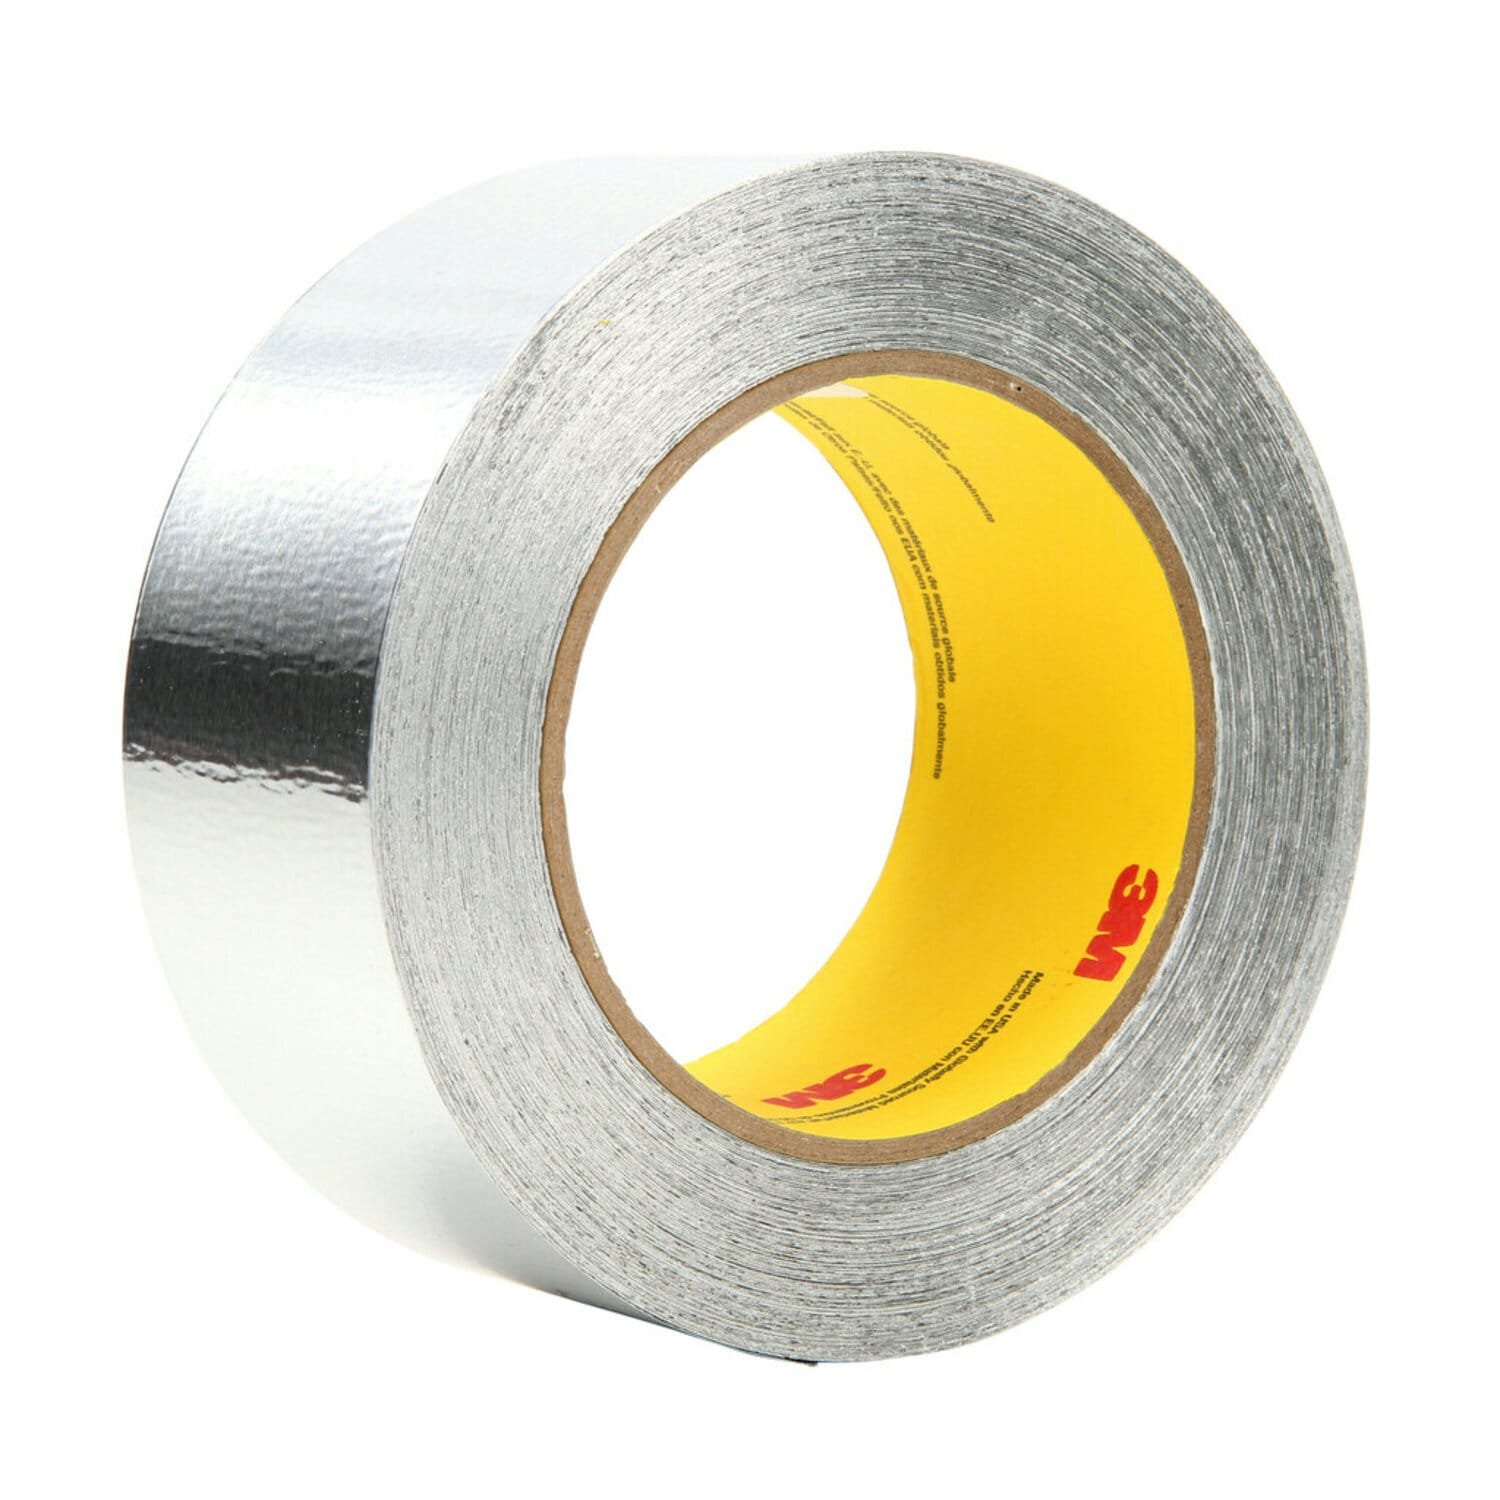 7010337263 - 3M Aluminum Foil Tape 425, Silver, 2 in x 60 yd, 4.6 mil, 24
Rolls/Case, Plastic Core